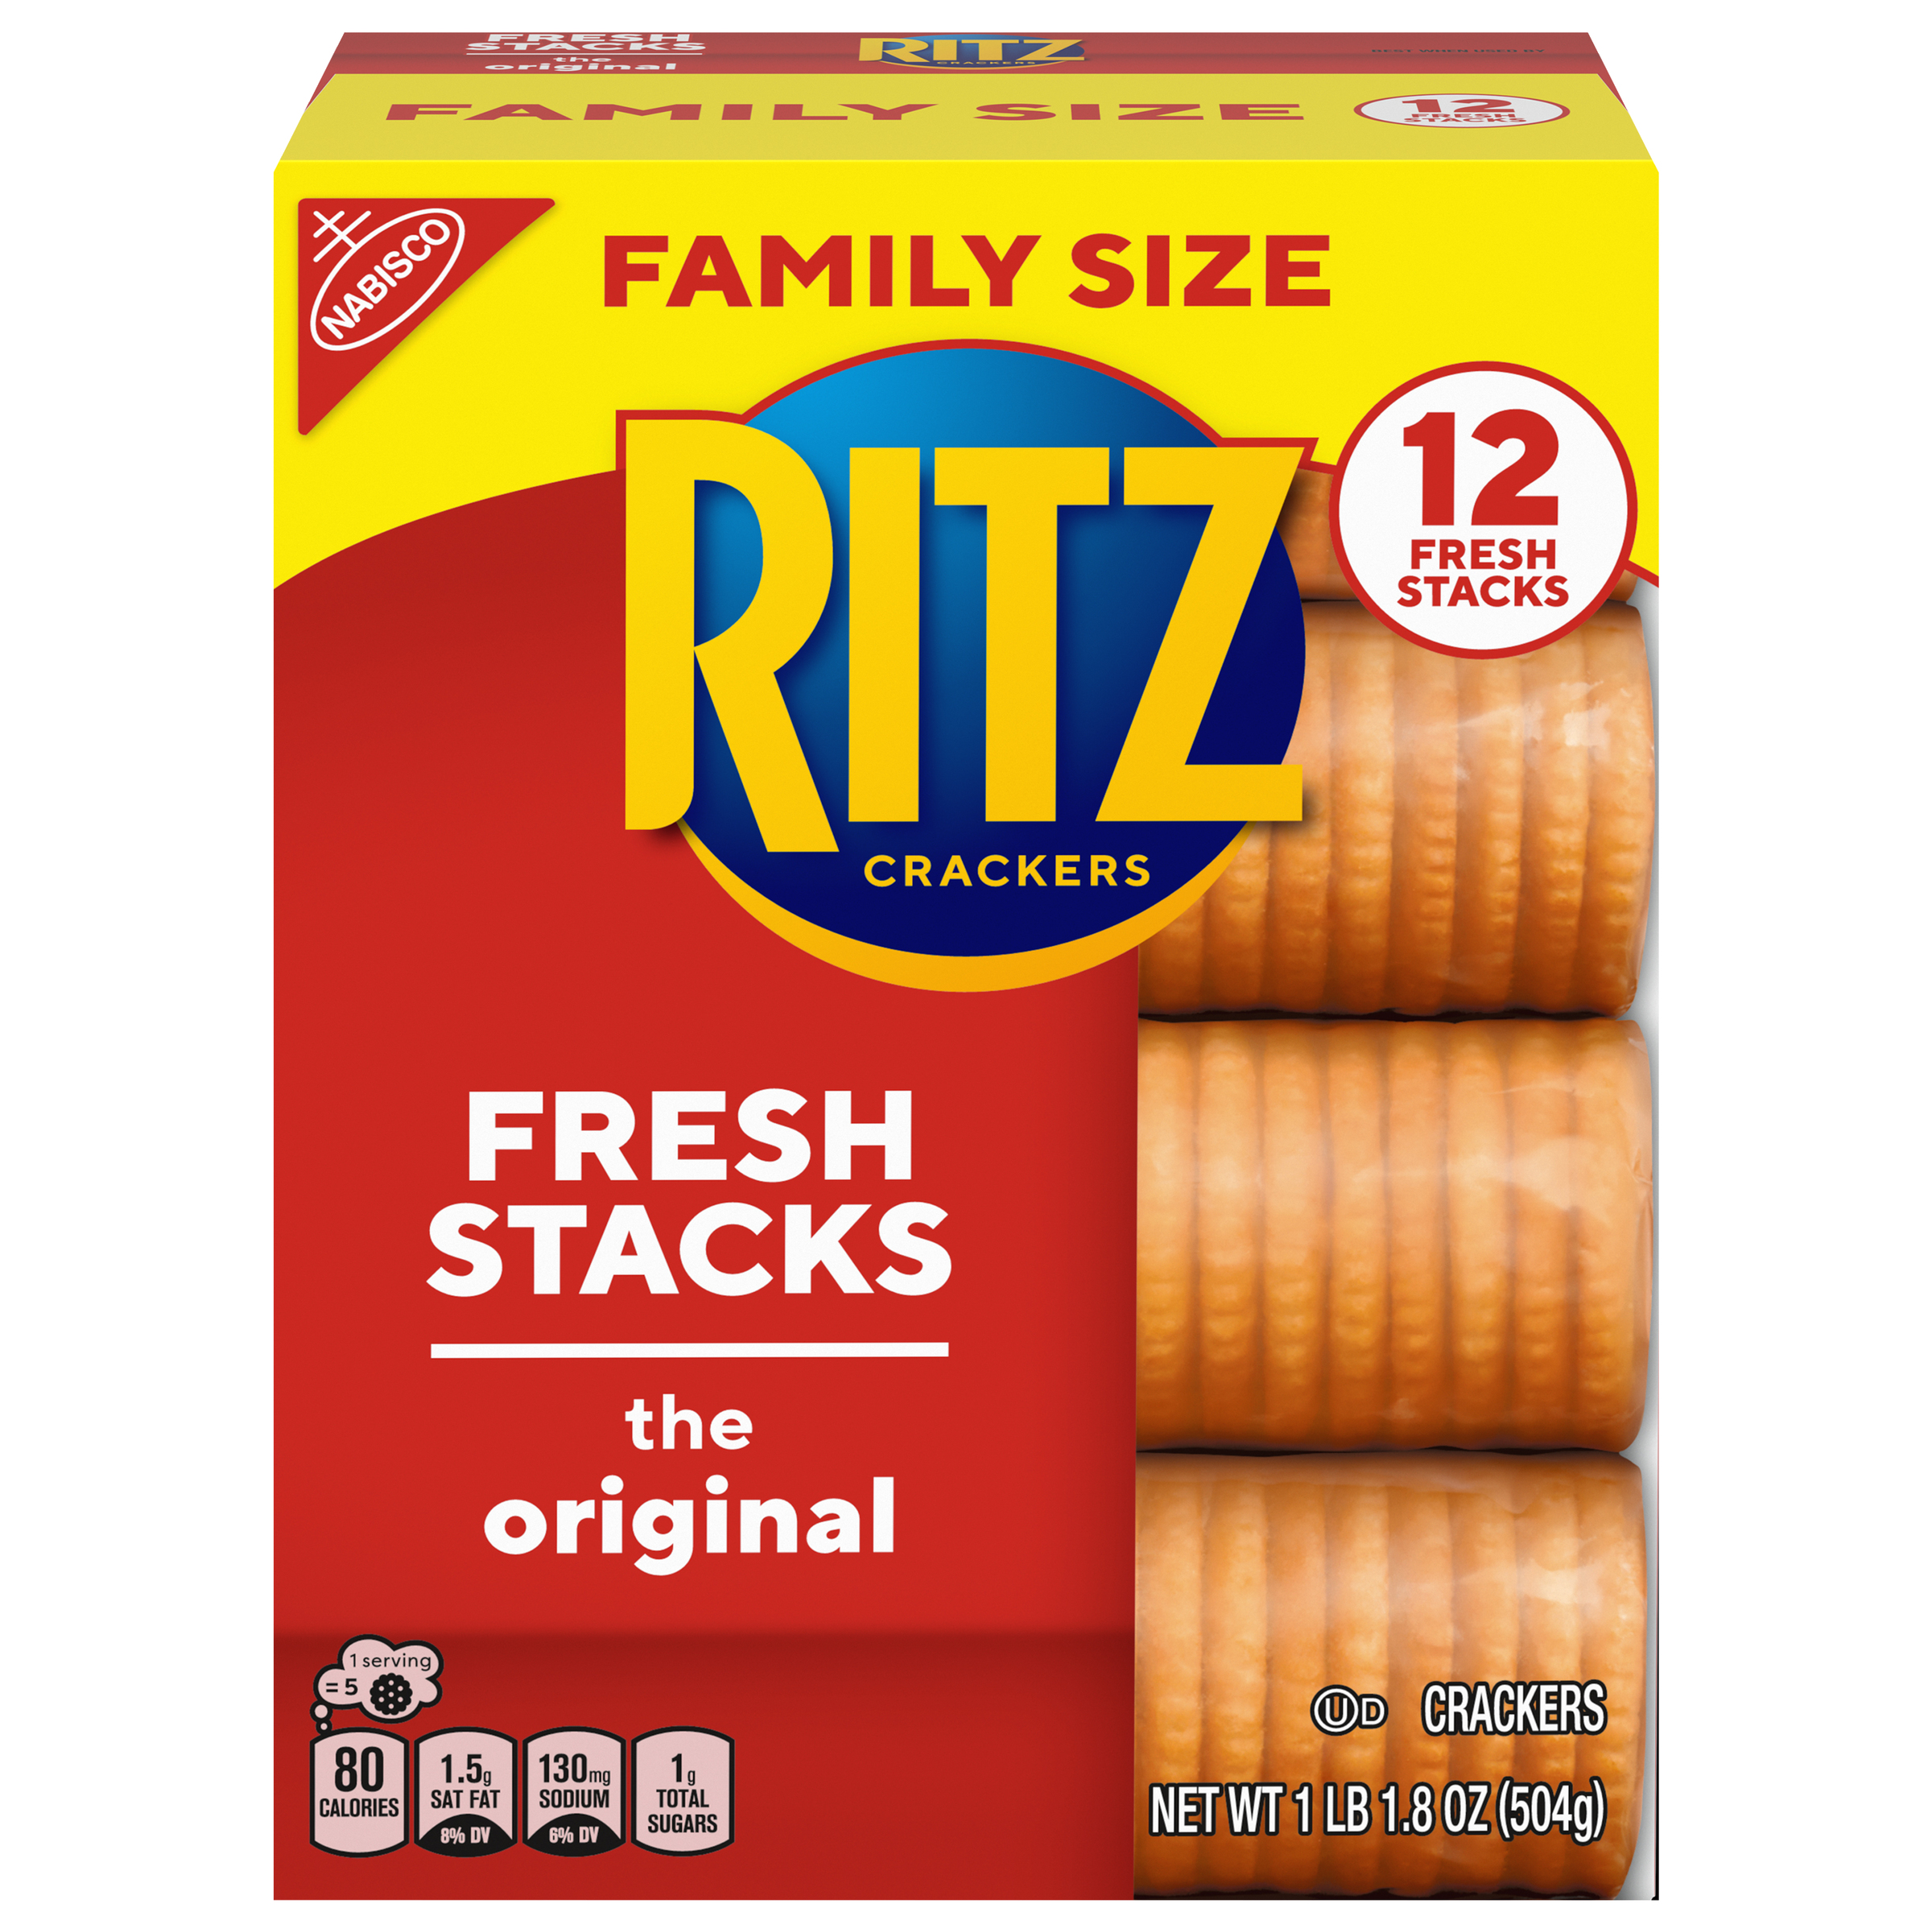 RITZ Fresh Stacks Original Crackers, Family Size, 17.8 oz-0